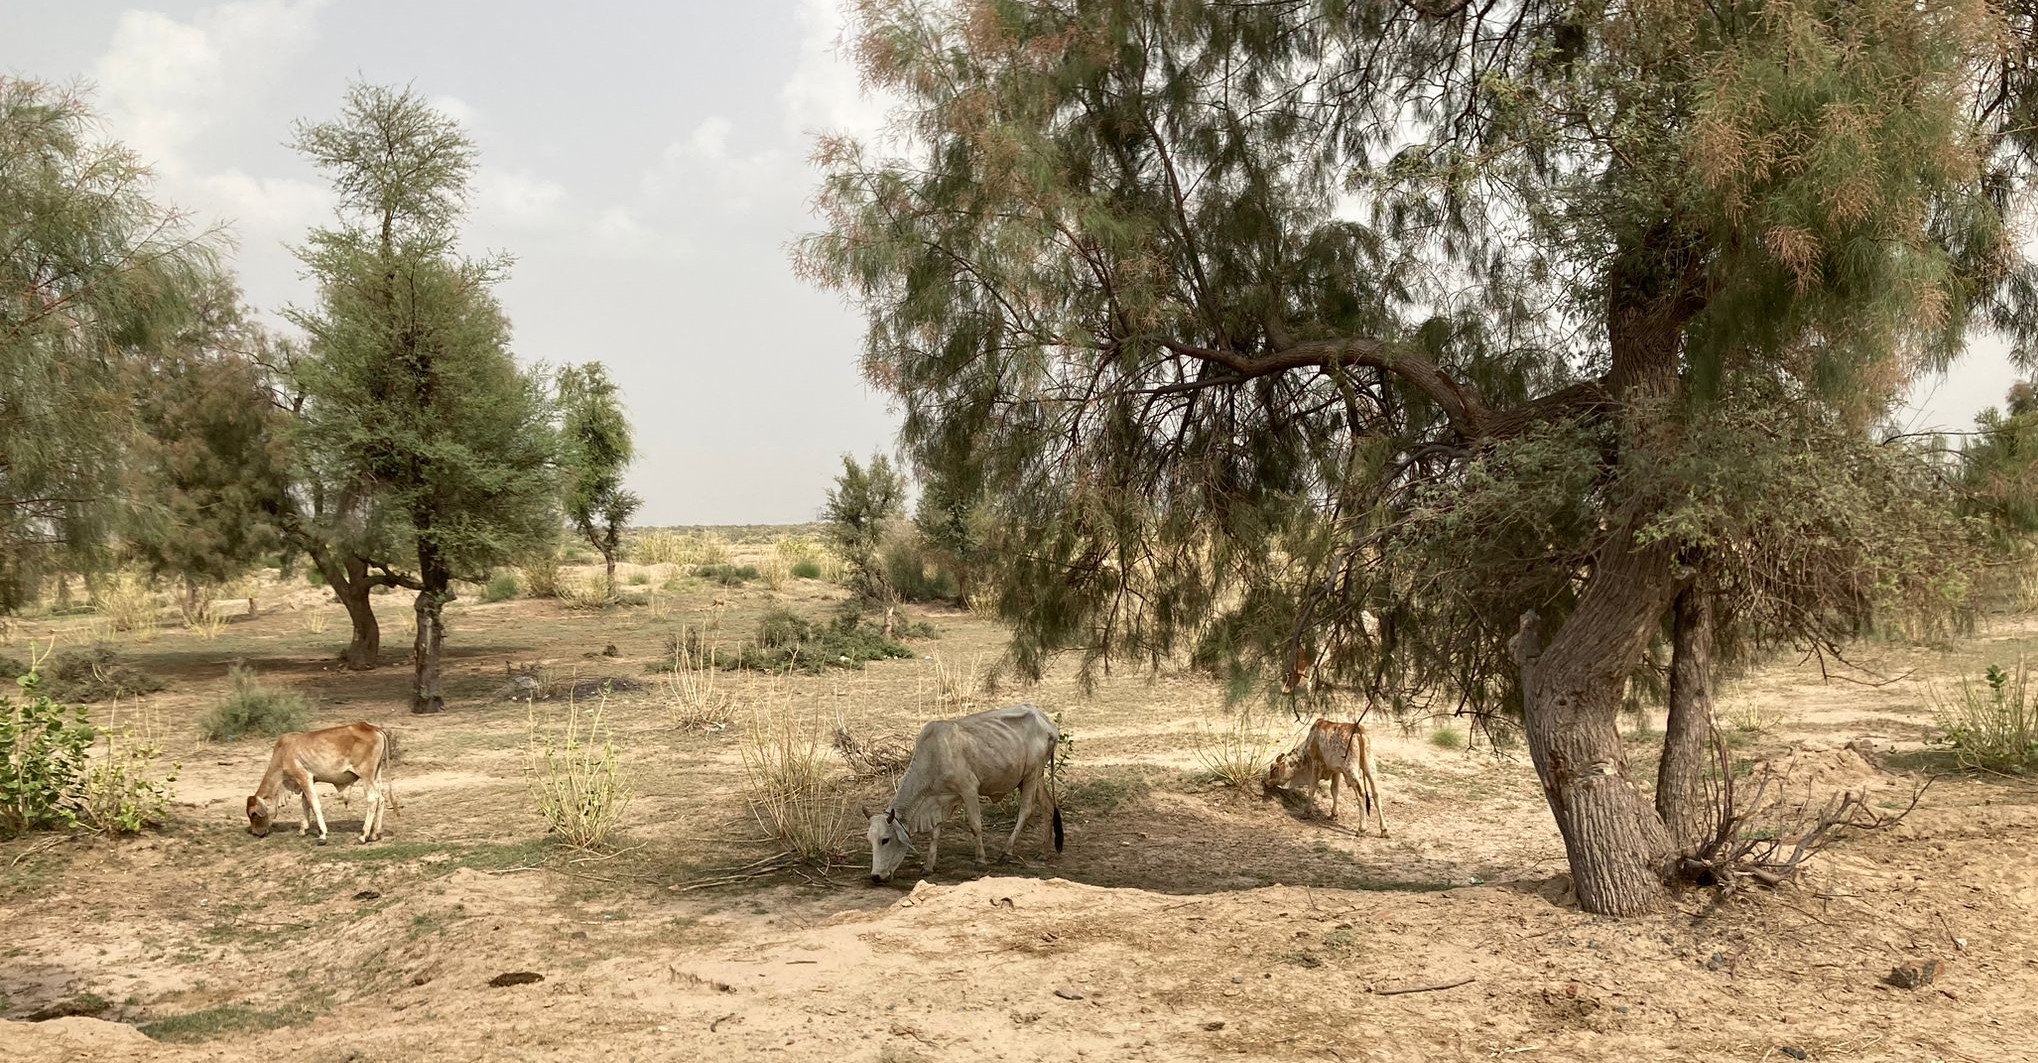 Cholistan Desert, with cattle grazing under tree